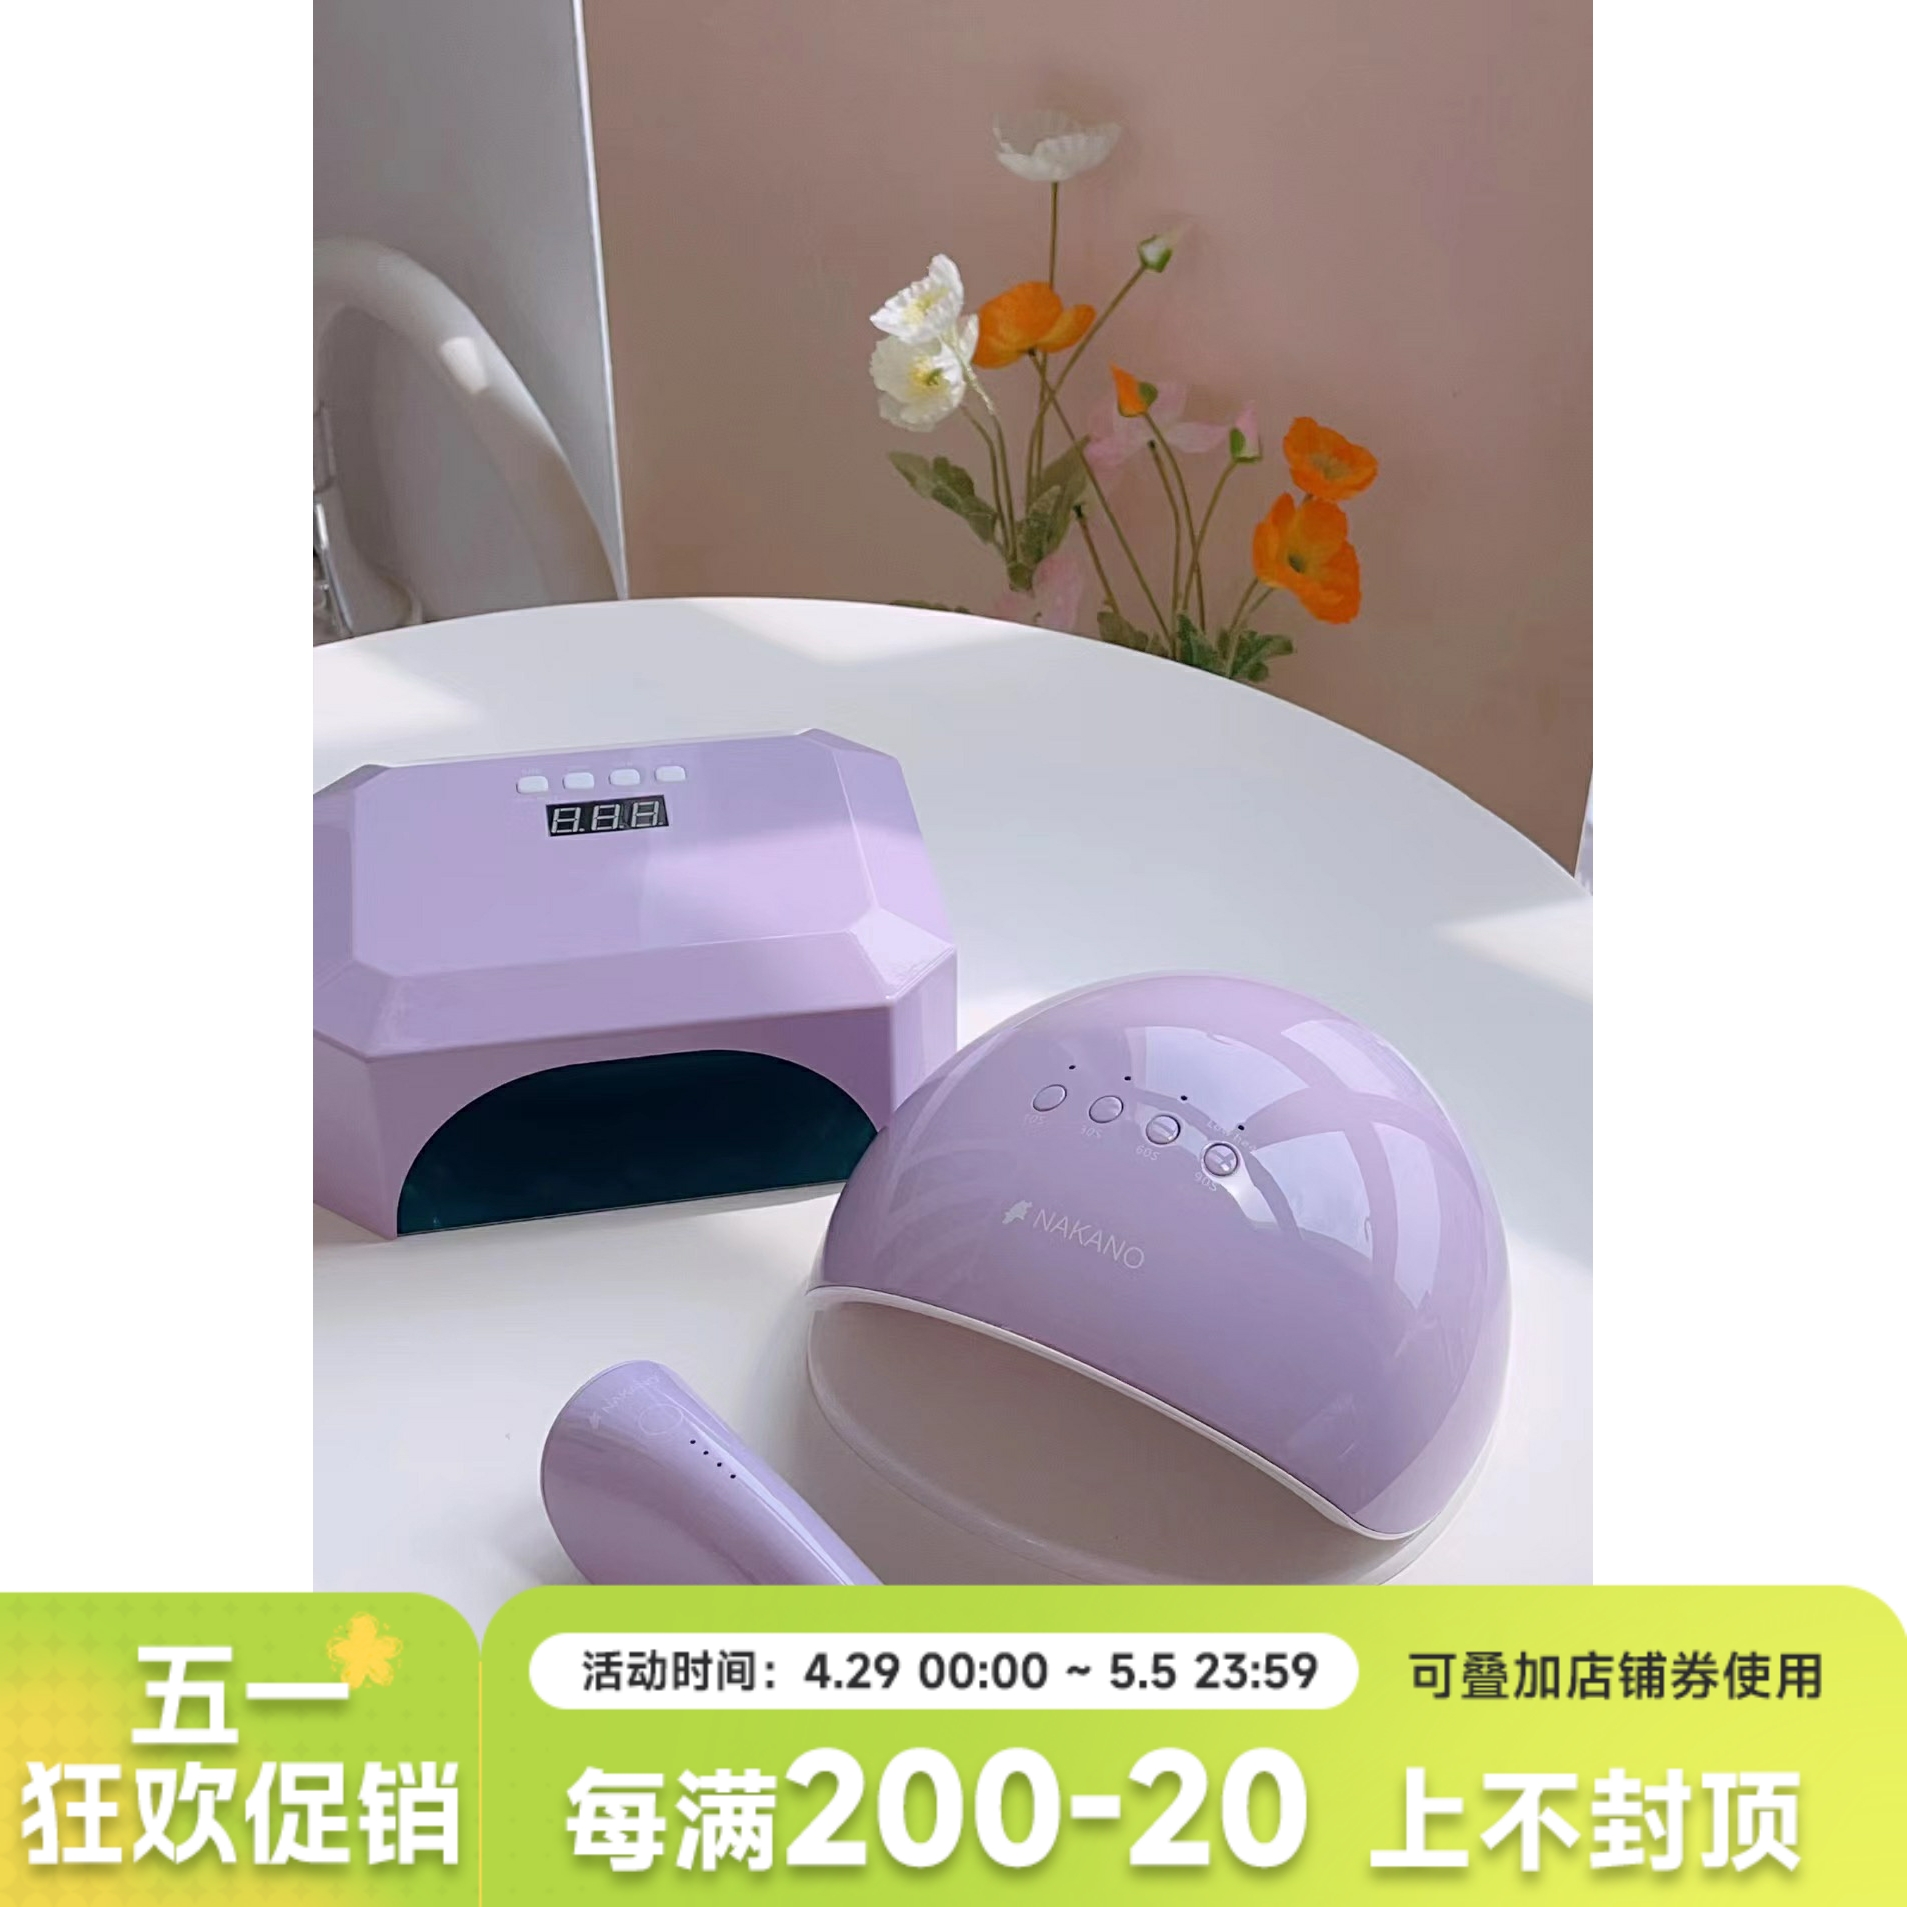 NAKANO新紫色美甲灯感应光疗灯充电款插电款36w UV/LED灯一年质保